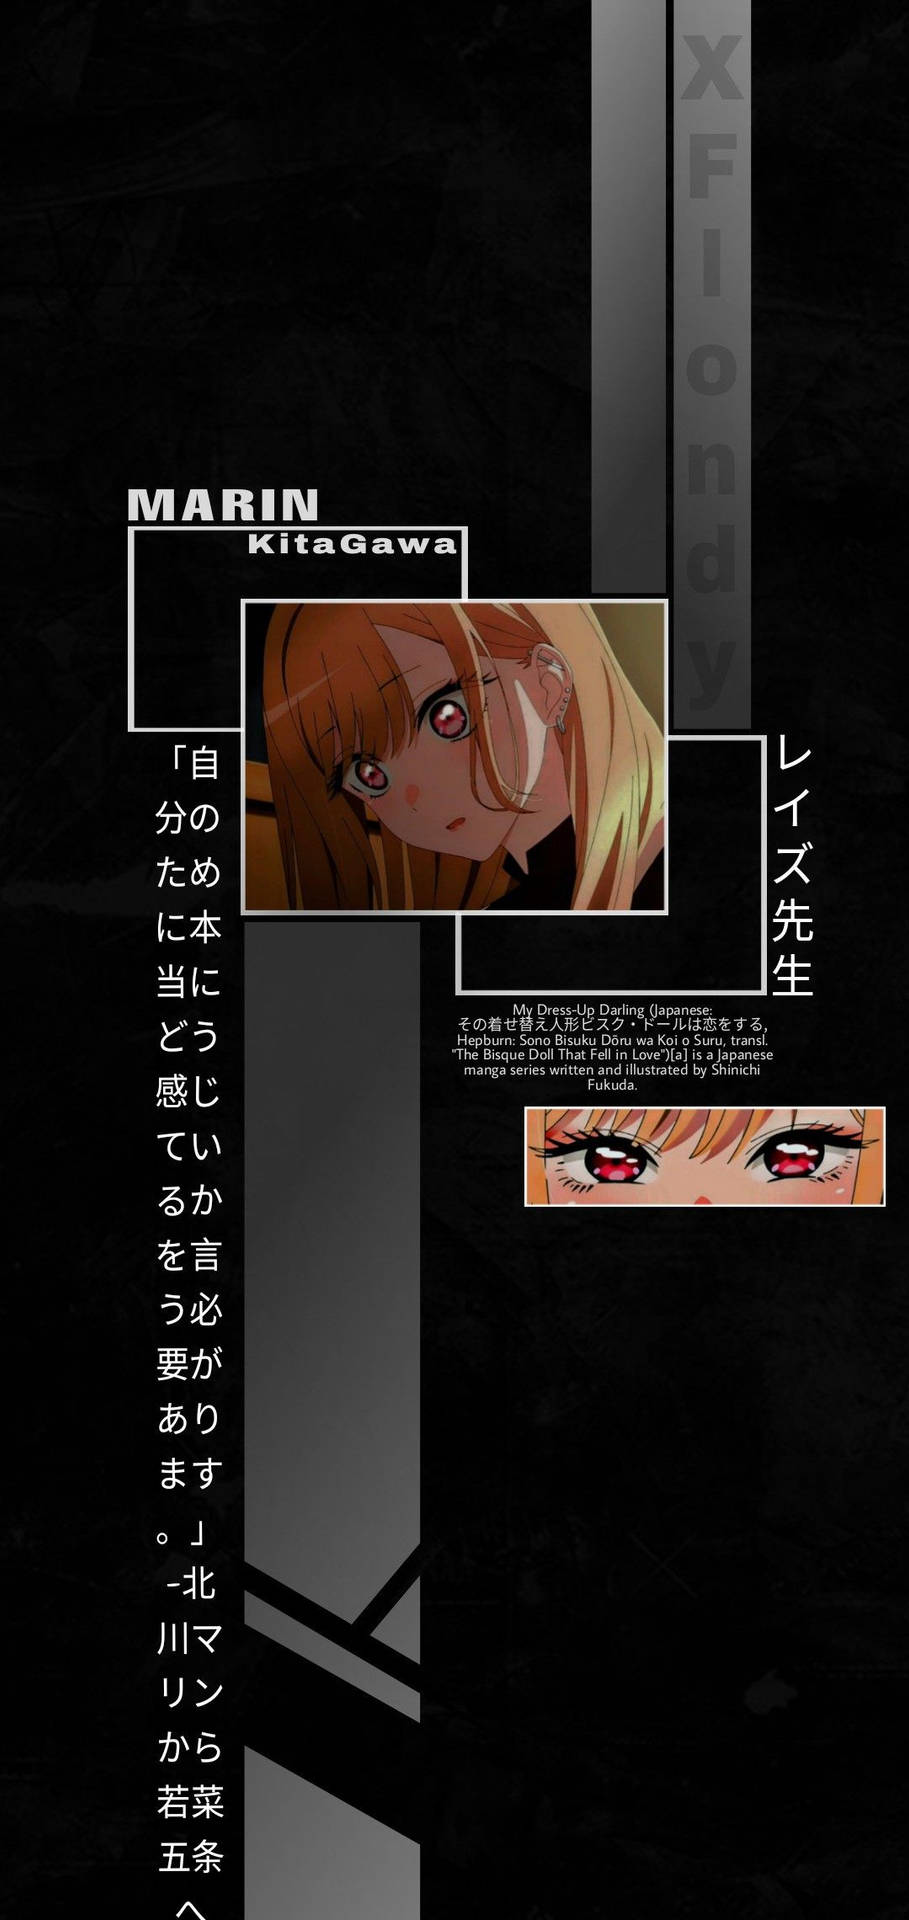 Black Aesthetic Anime Marin Kitagawa Background